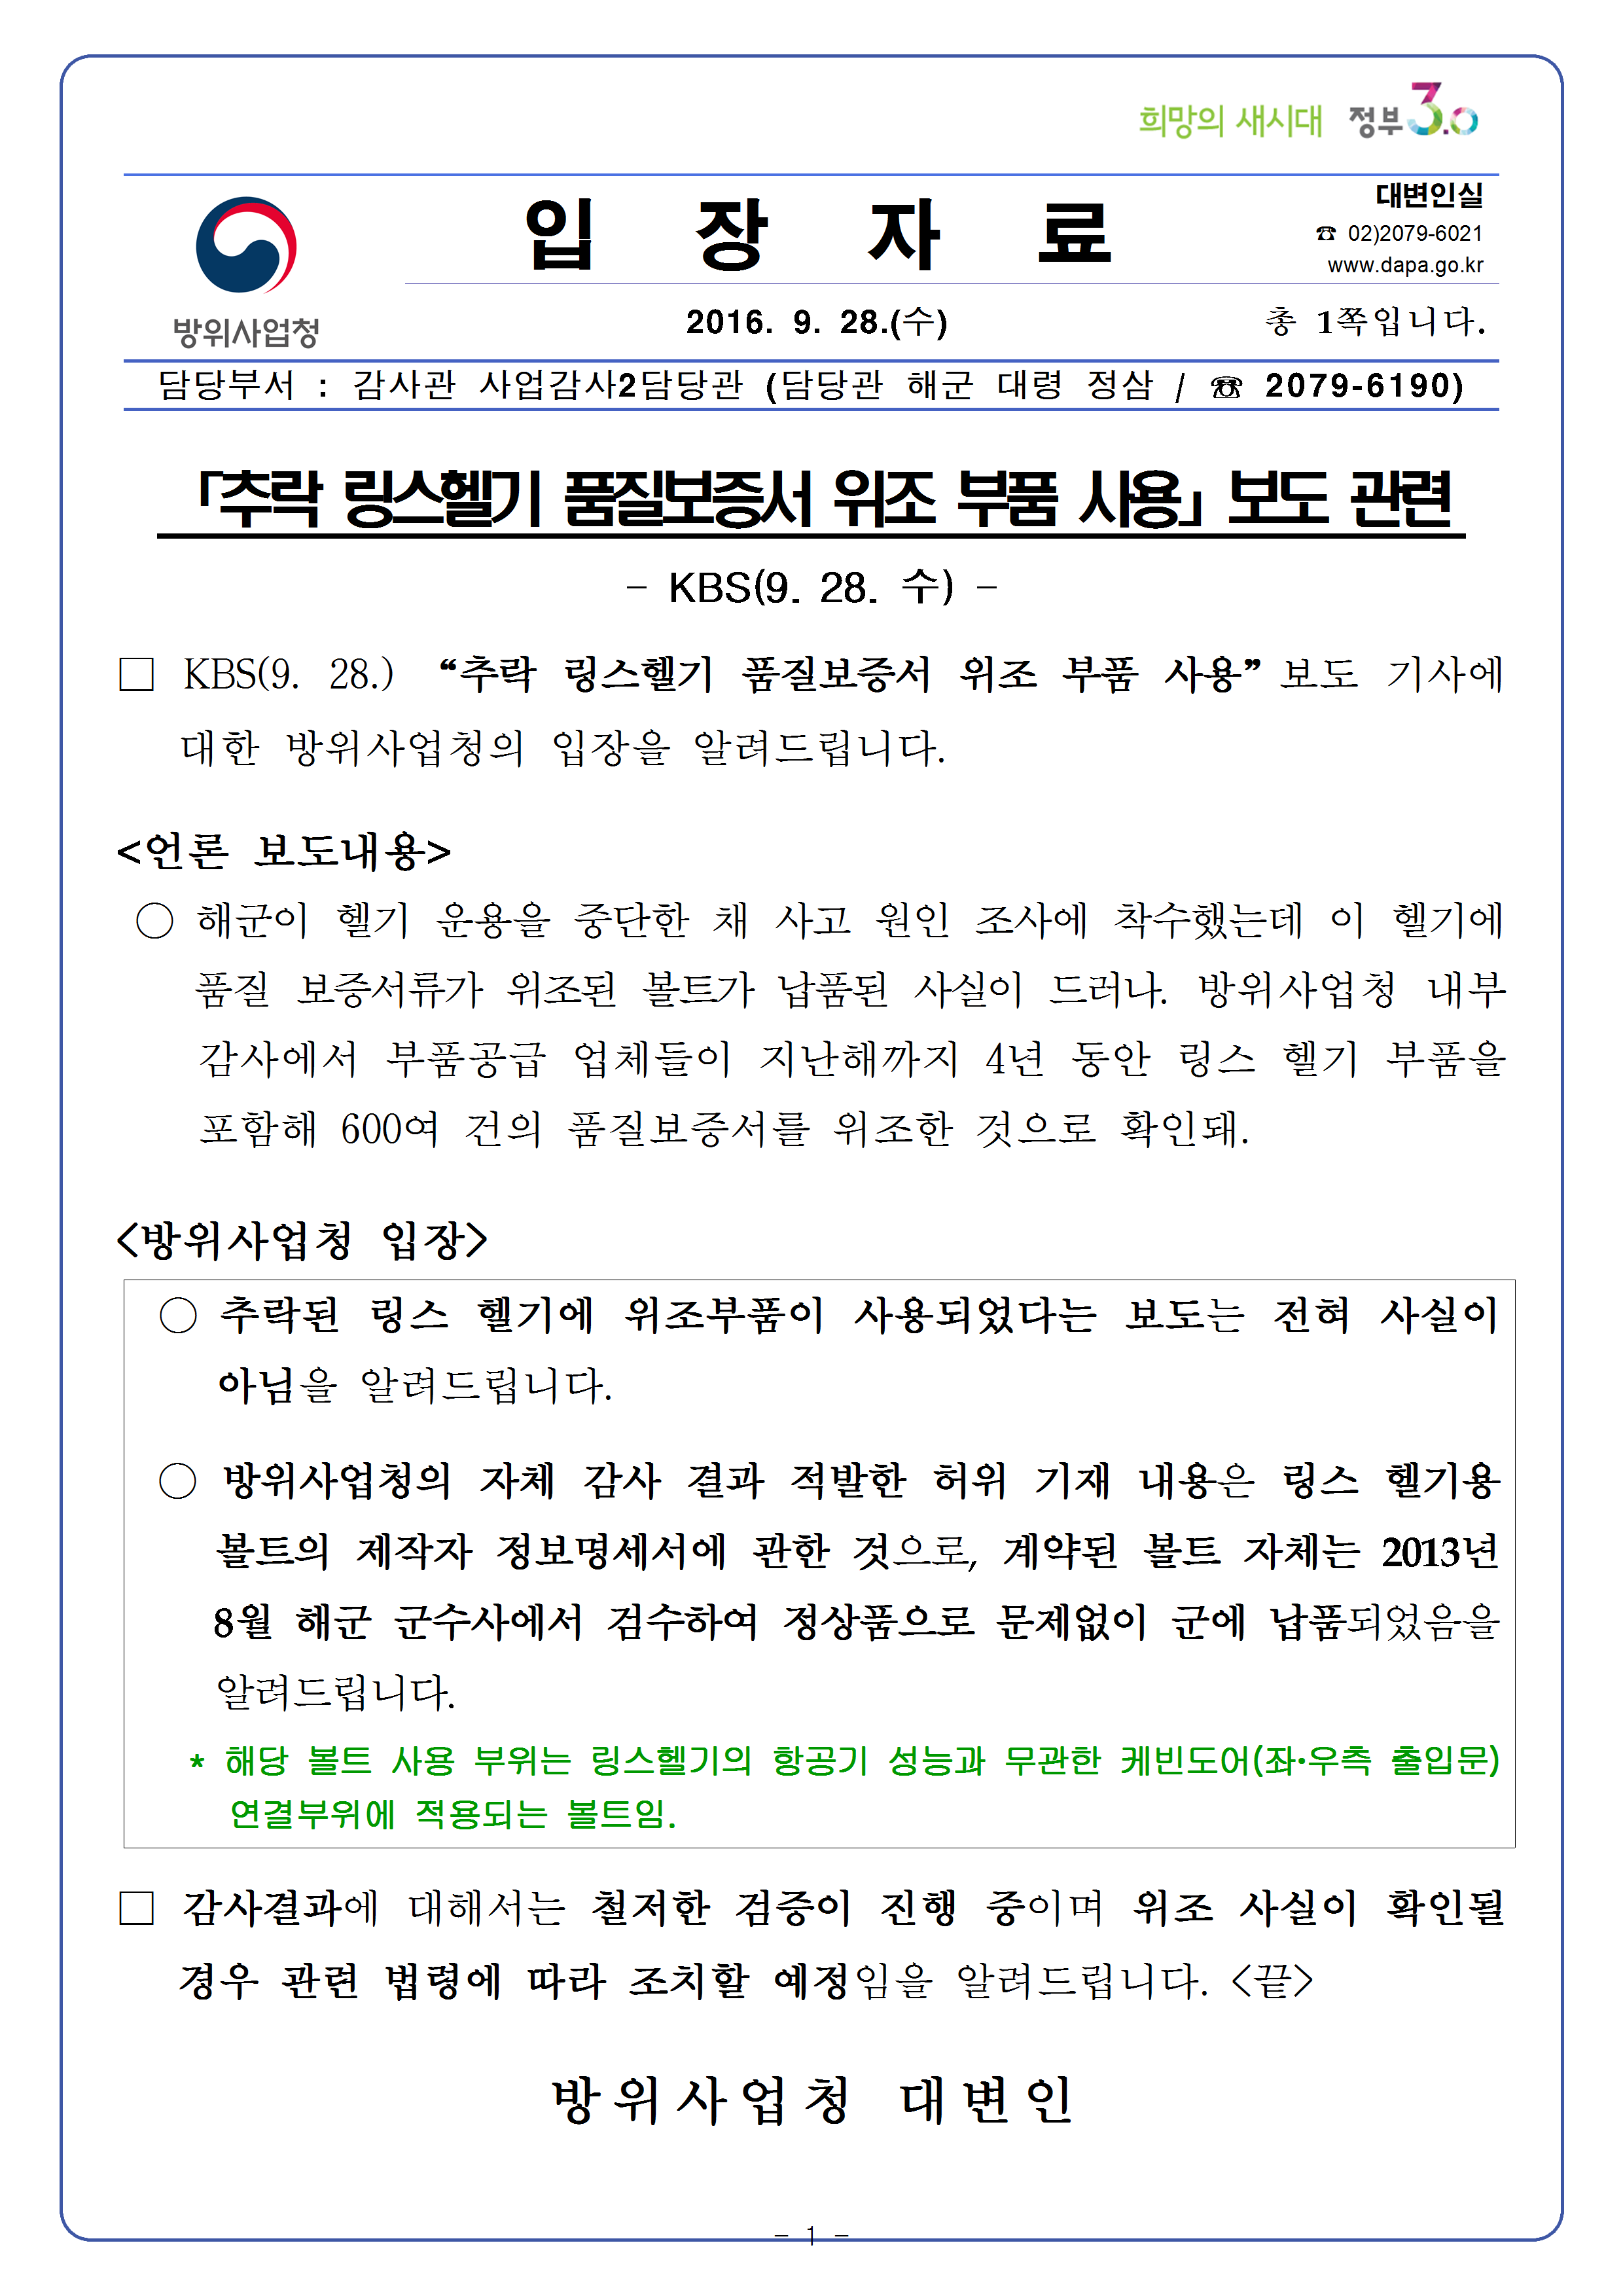 KBS 추락 링스헬기 품질보증서 위조 부품 사용 보도관련 청 입장자료001.png